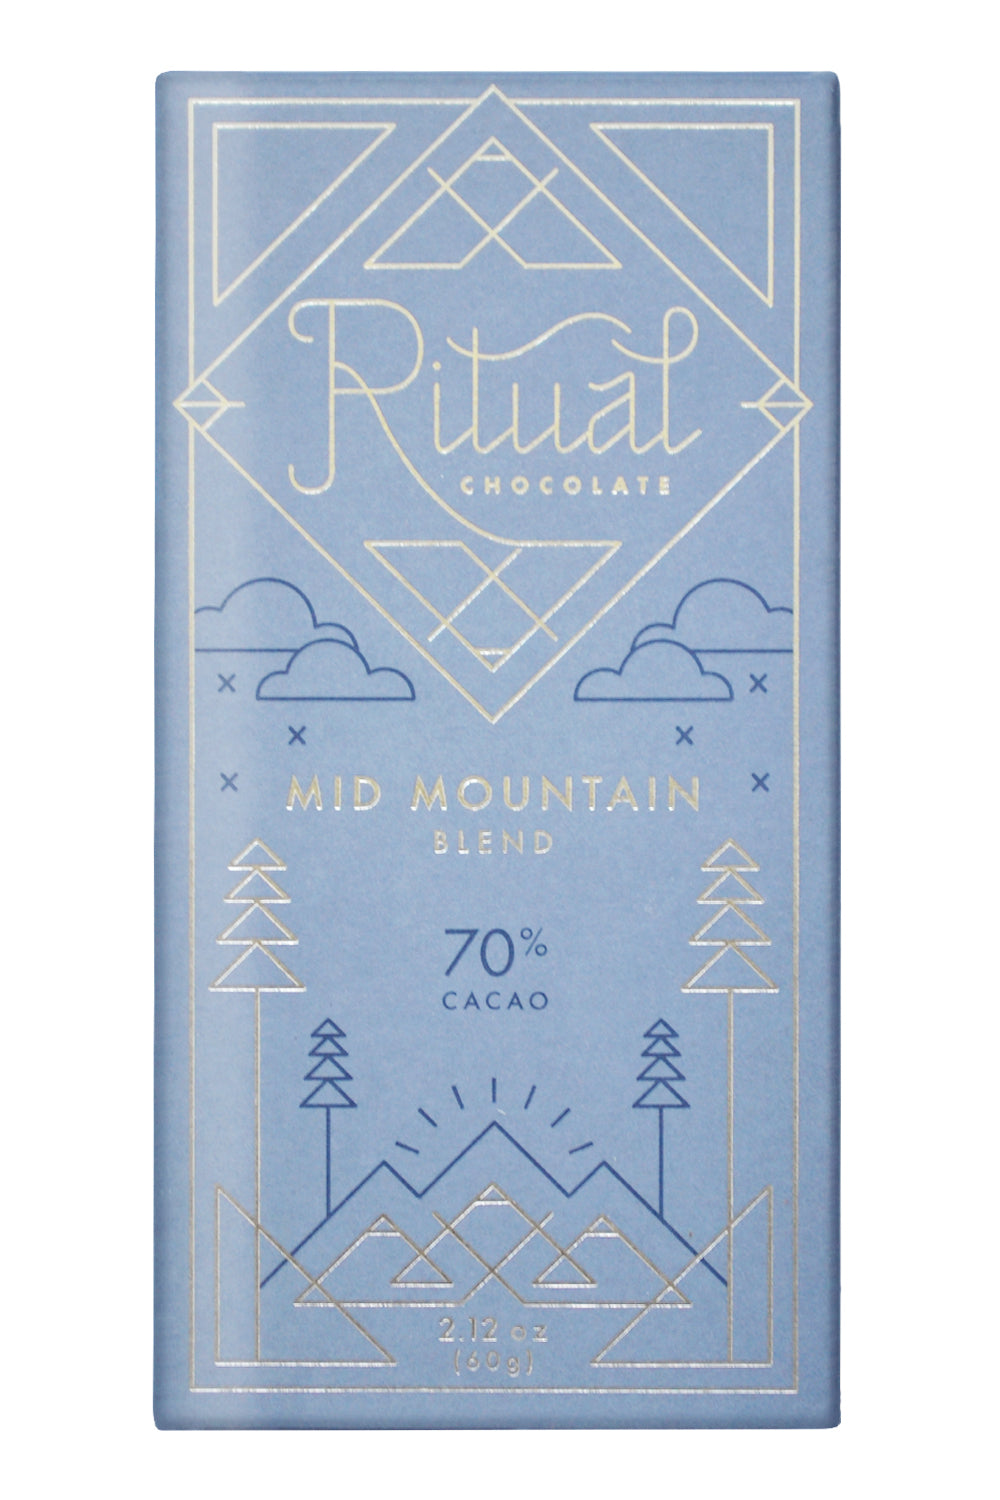 Ritual Dark Chocolate - Mid Mountain Blend